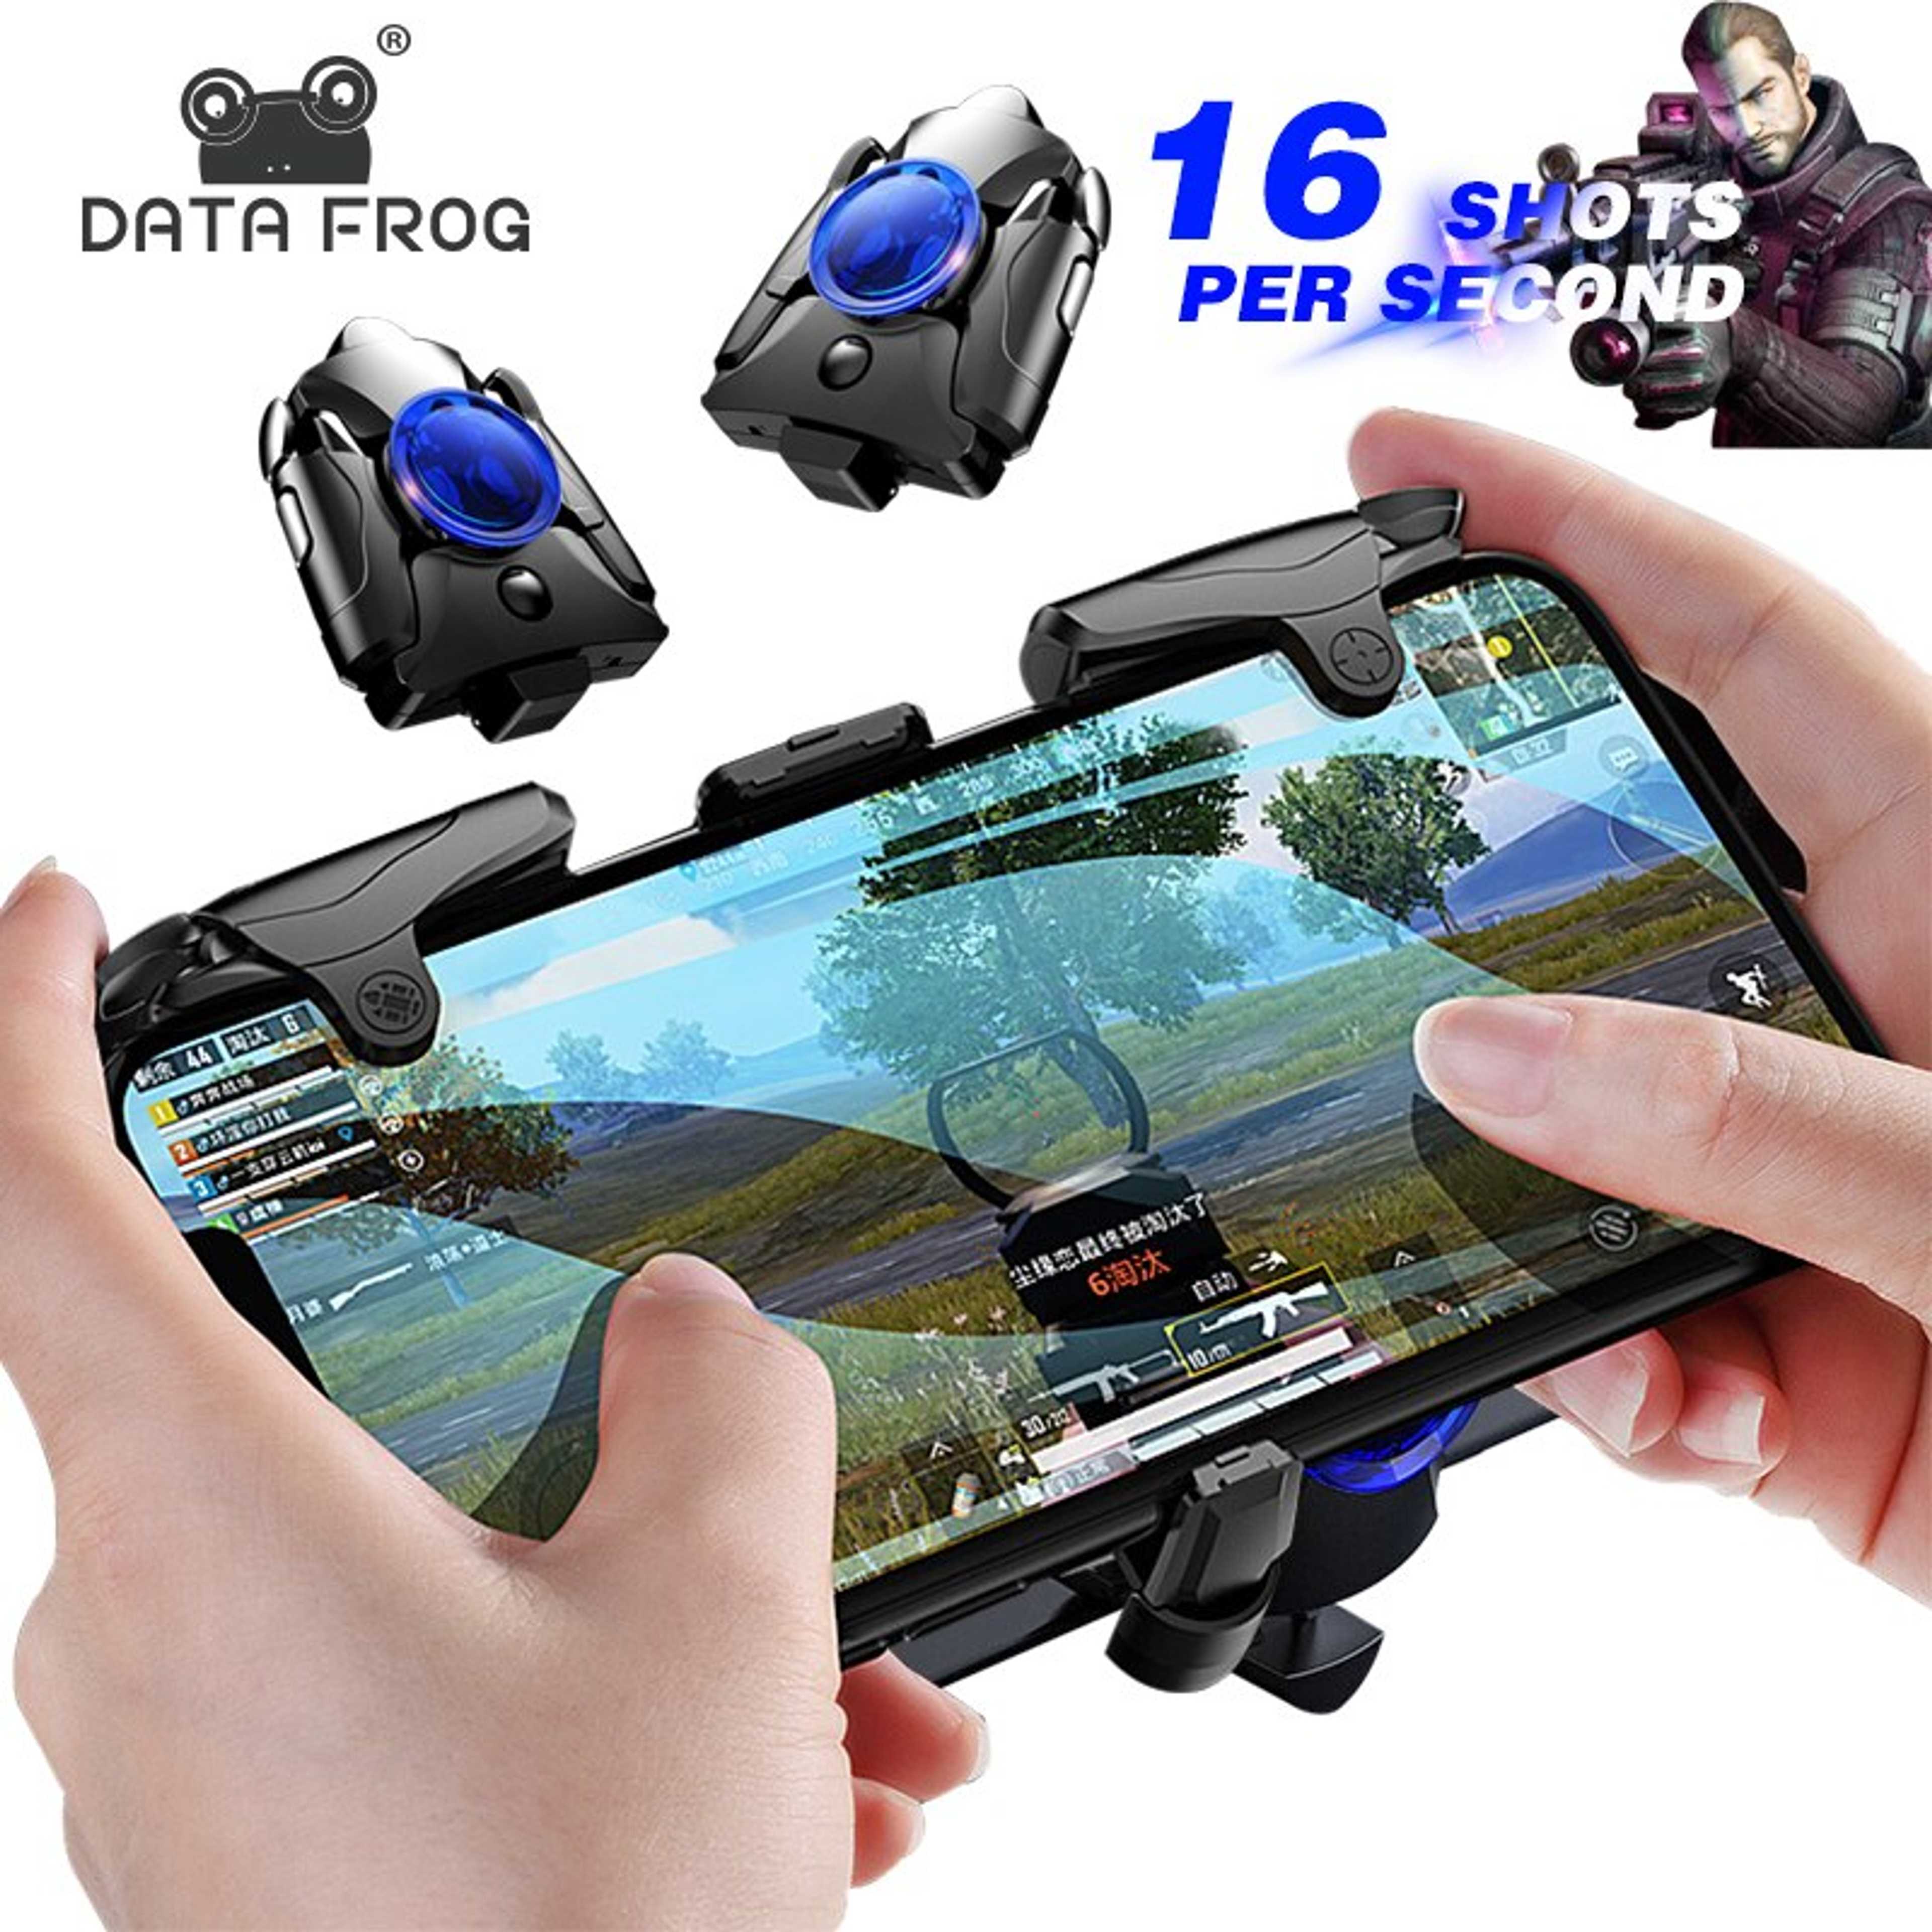 Data Frog Mobile Phone Gaming Trigger for PUBG Mobile